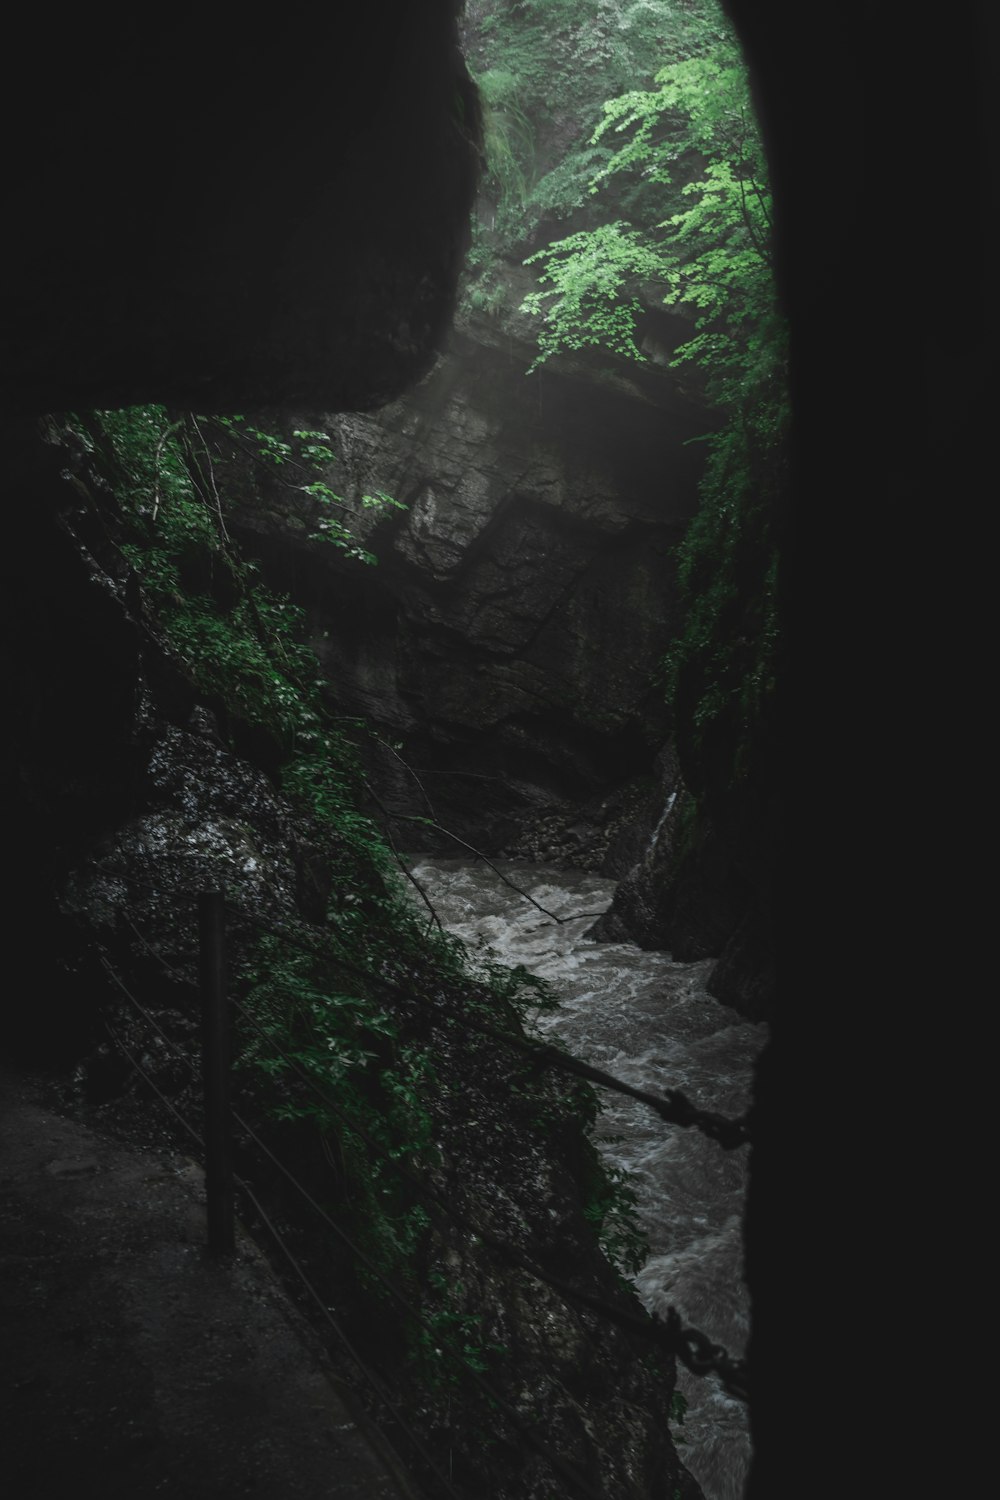 a dark cave with a stream running through it